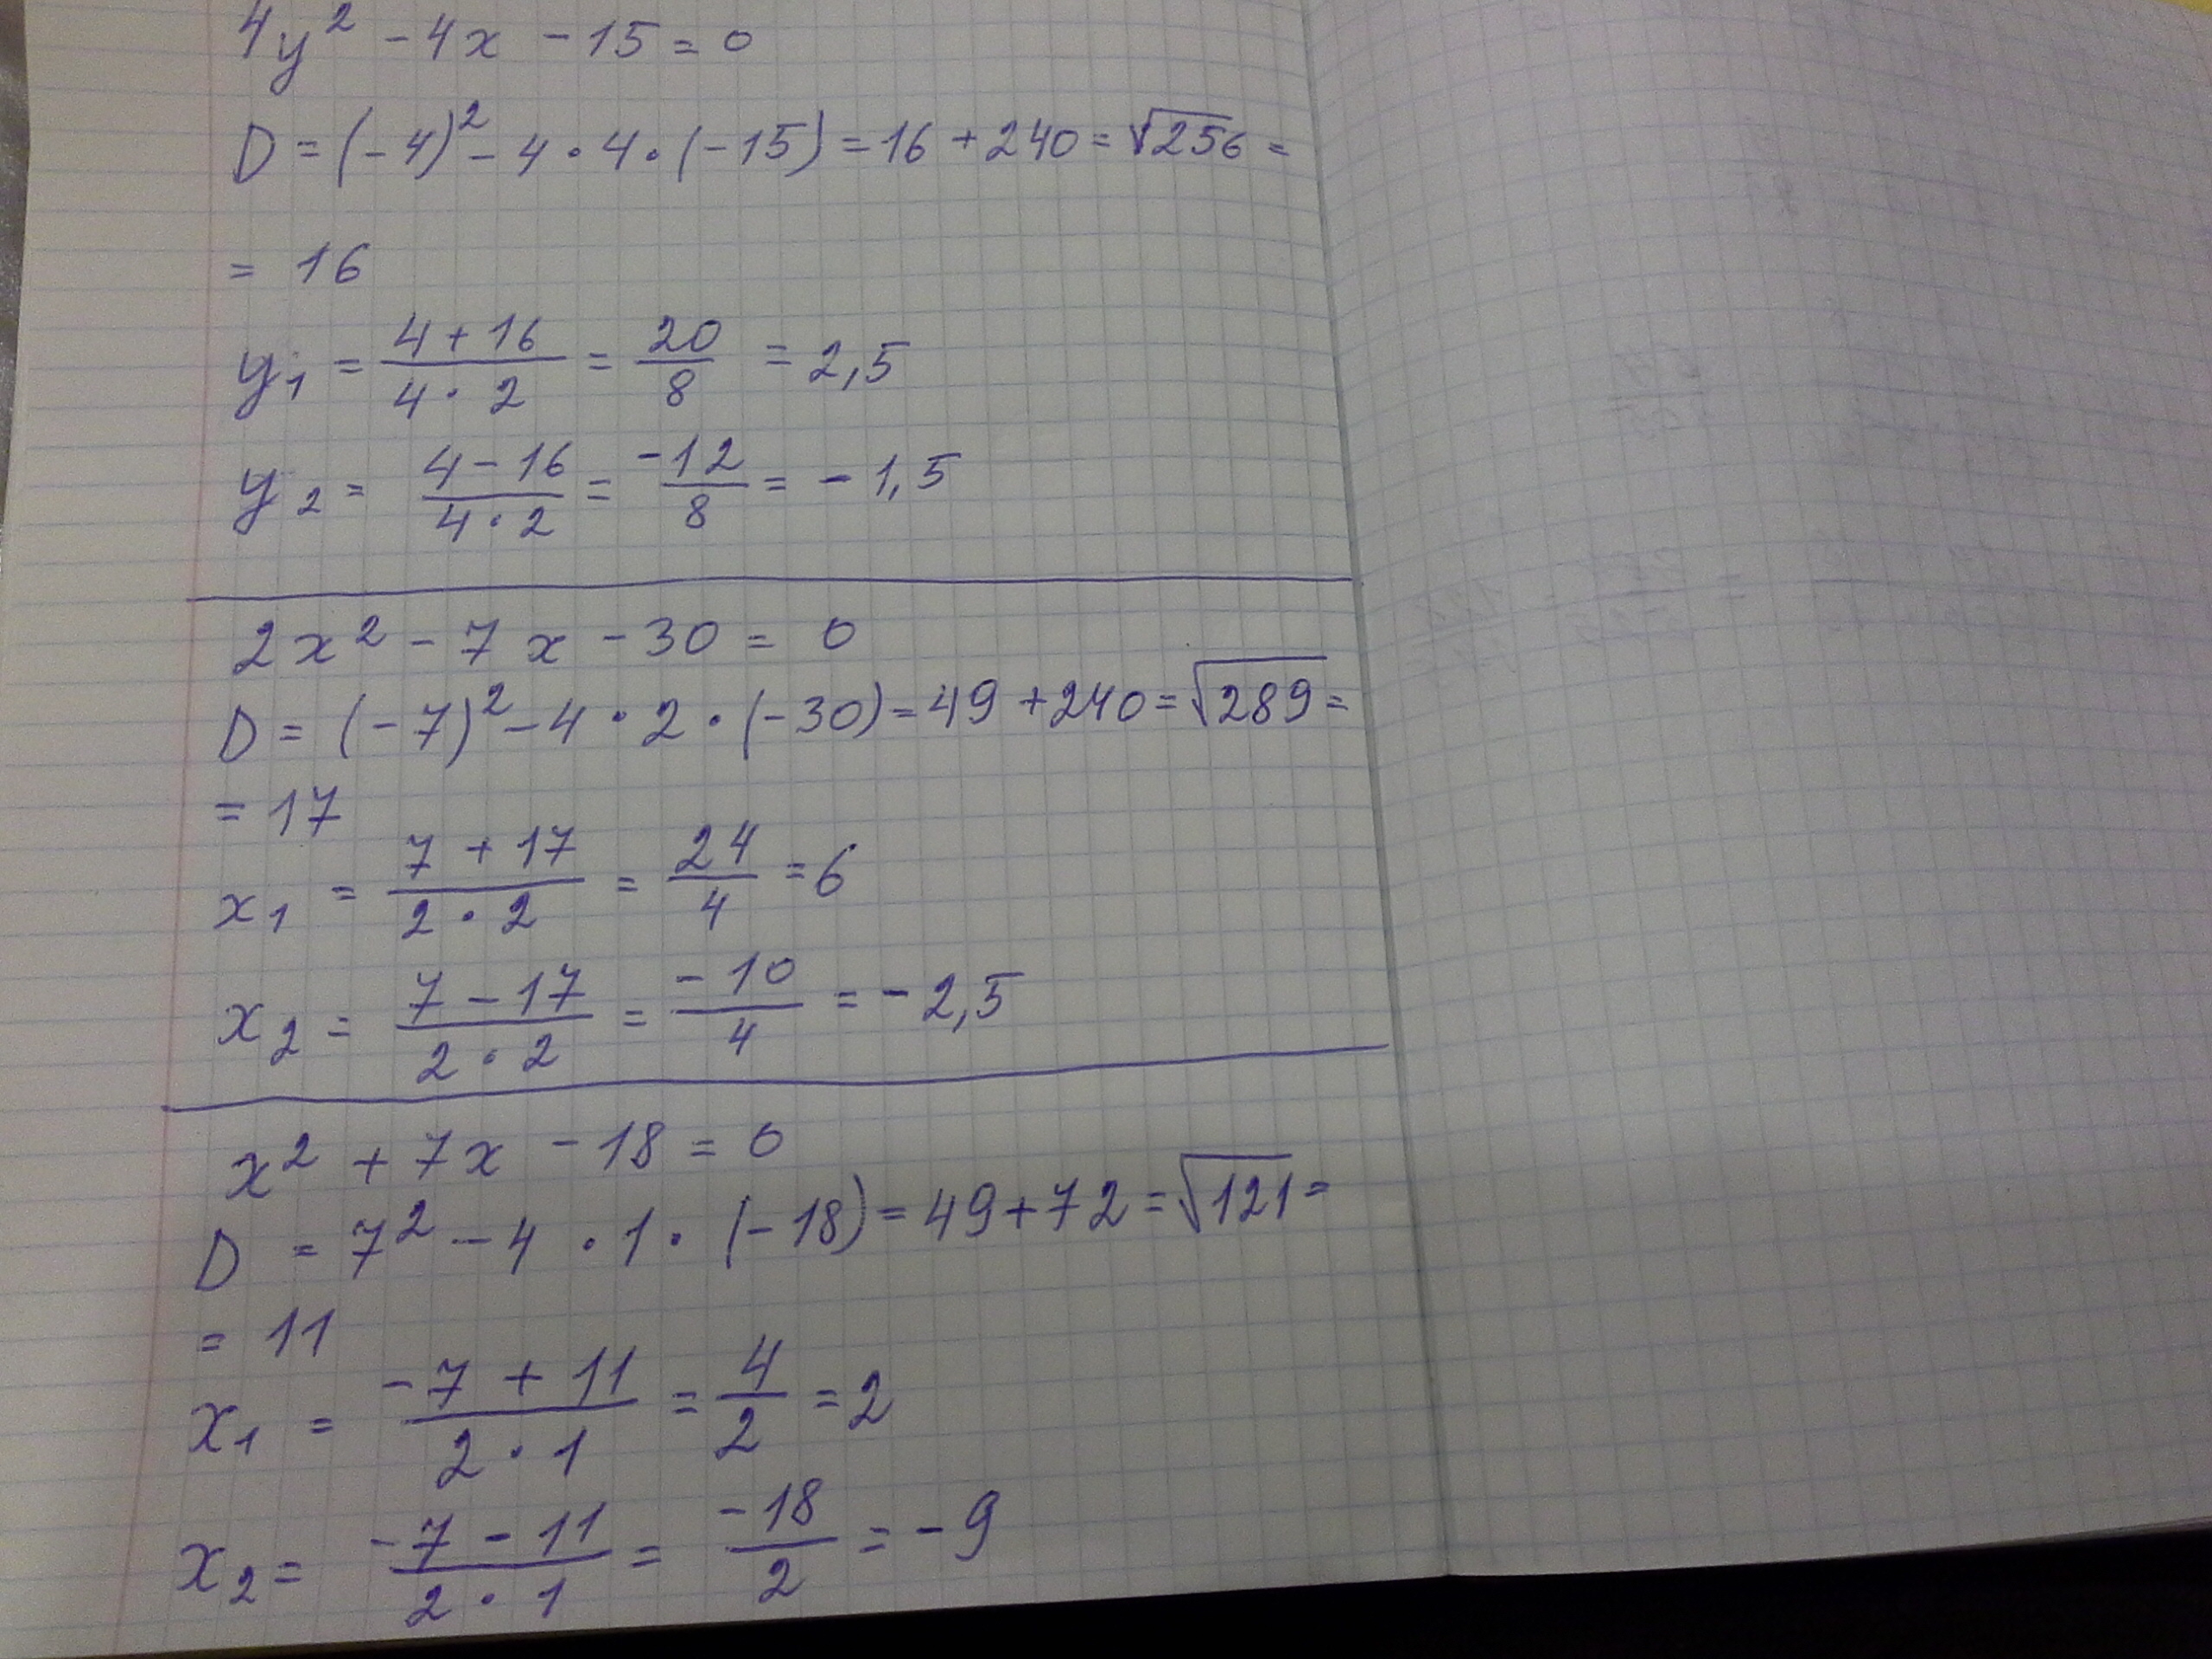 15 10x 0. X 2 4 X 15 0. X2-2x-15=0. X^2+3x-4/x^2+x-30>0. 7x+2x.